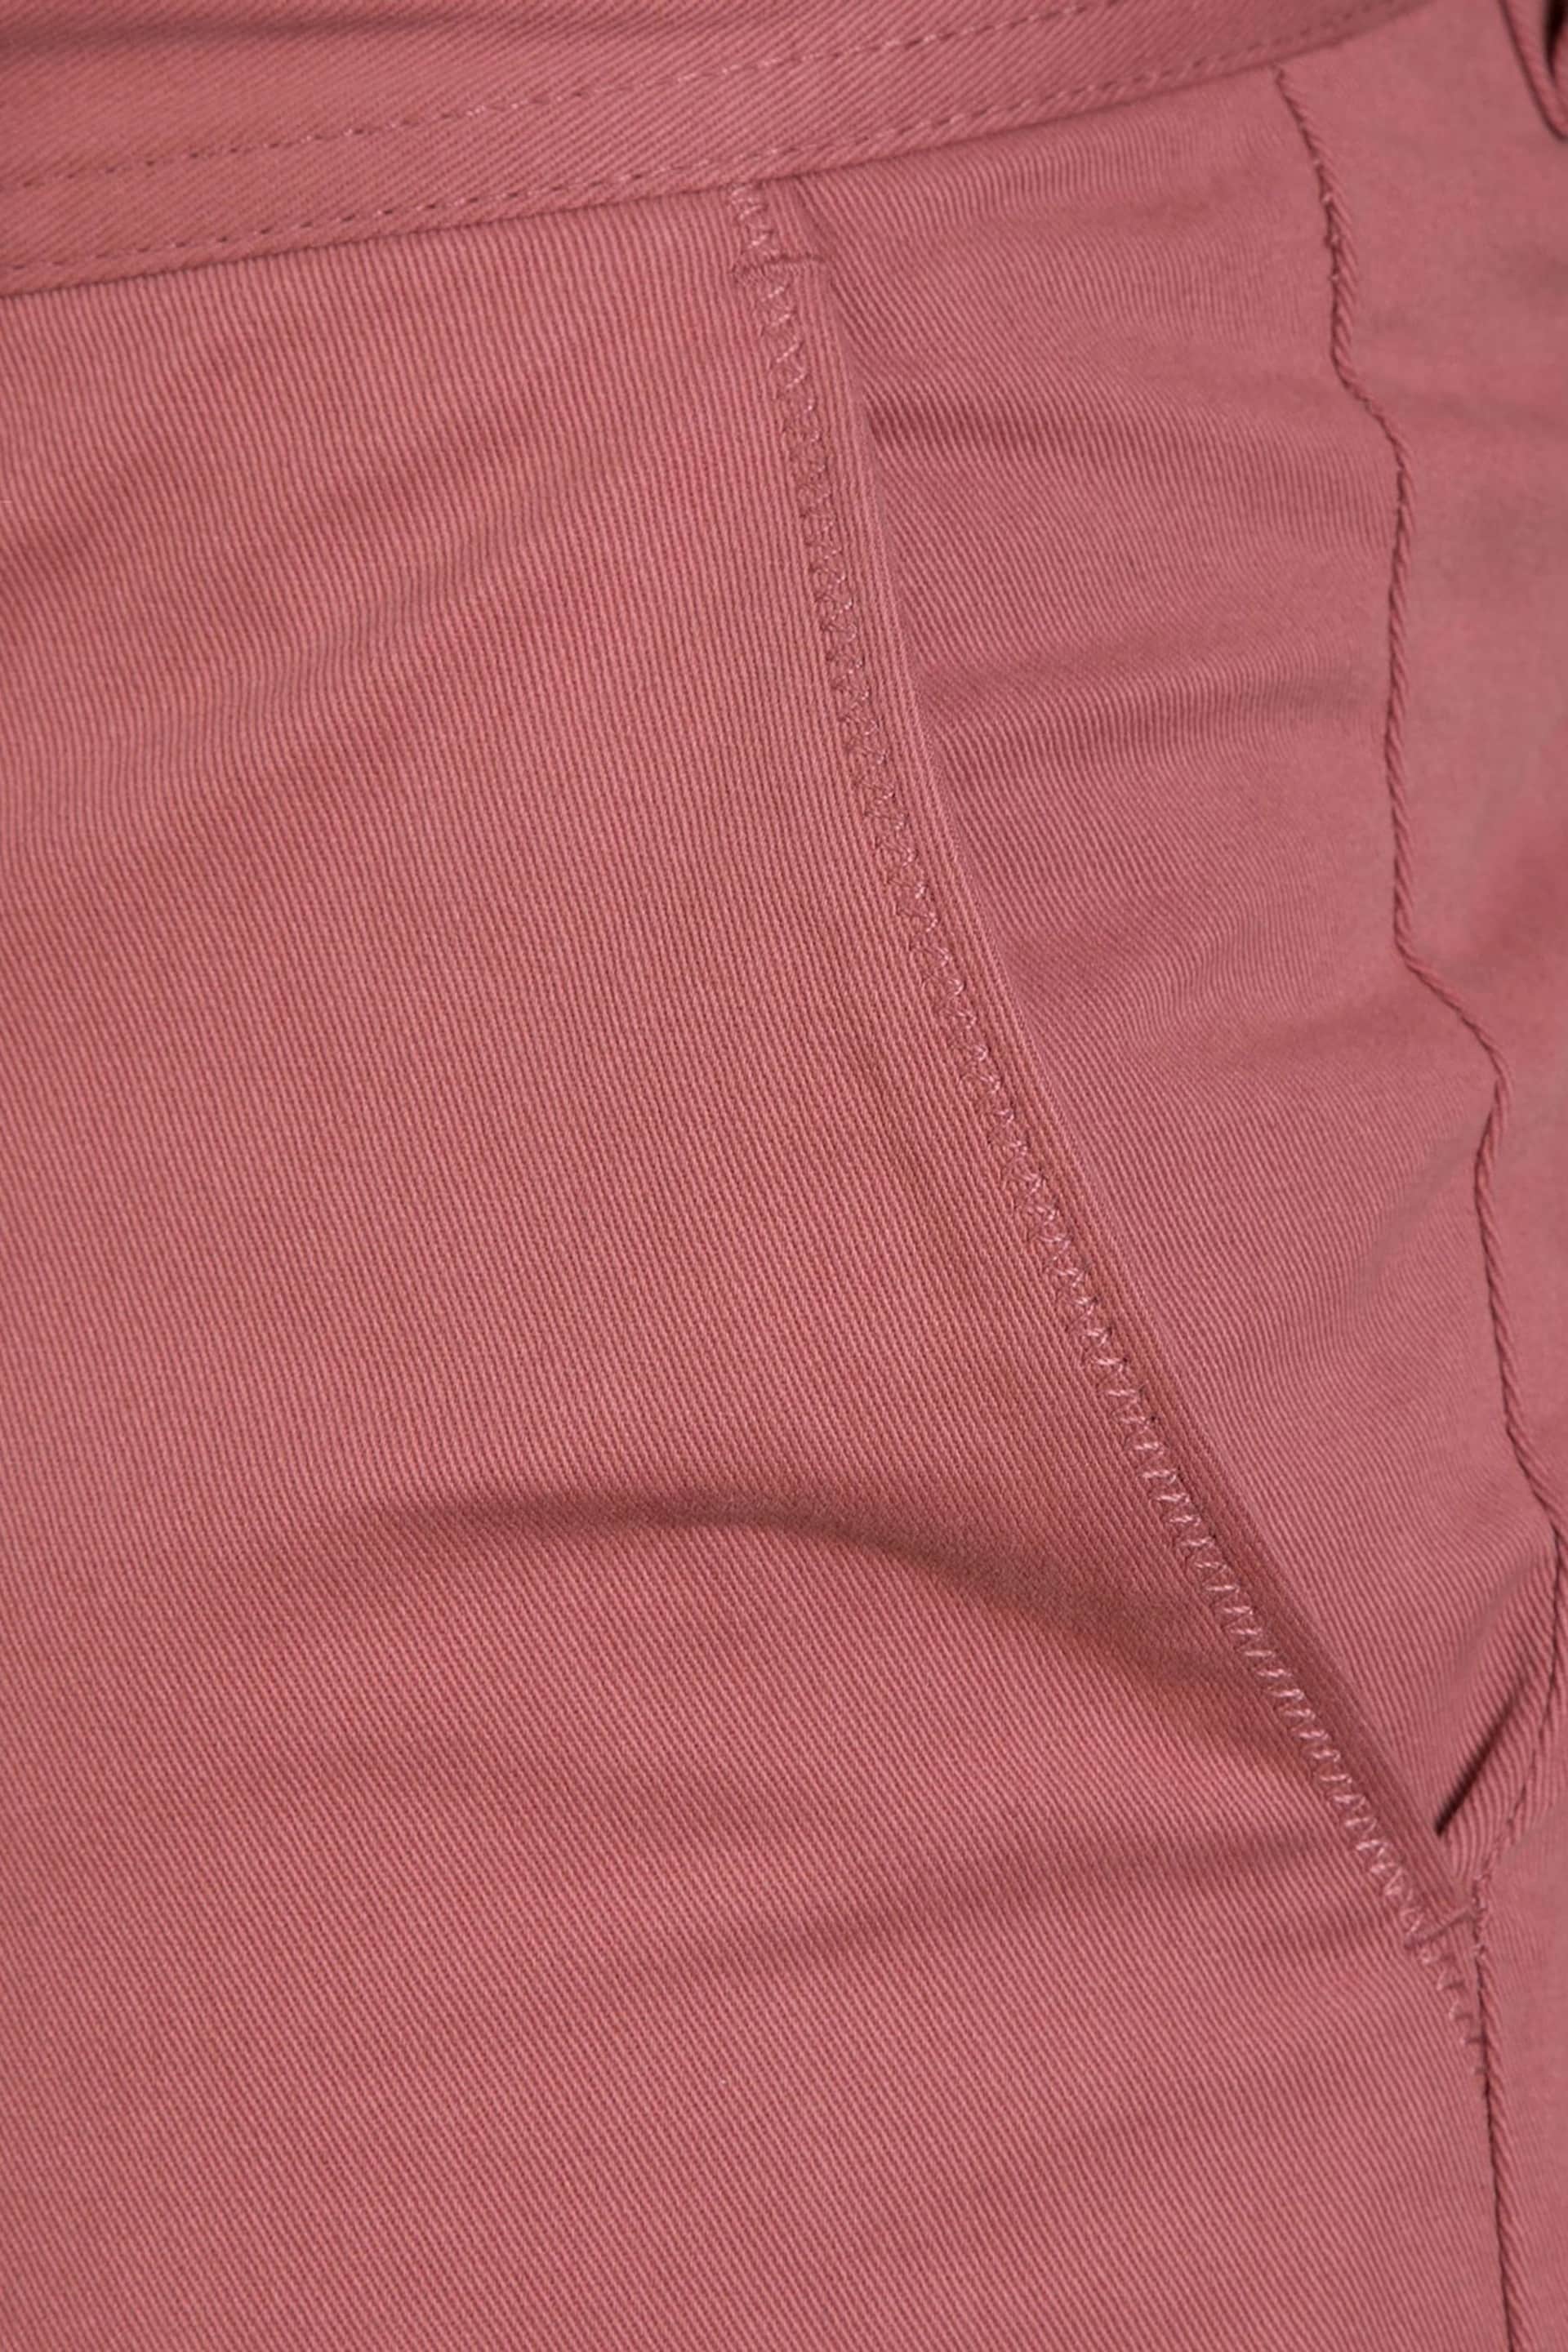 Raging Bull Pink Chino Shorts - Image 5 of 5